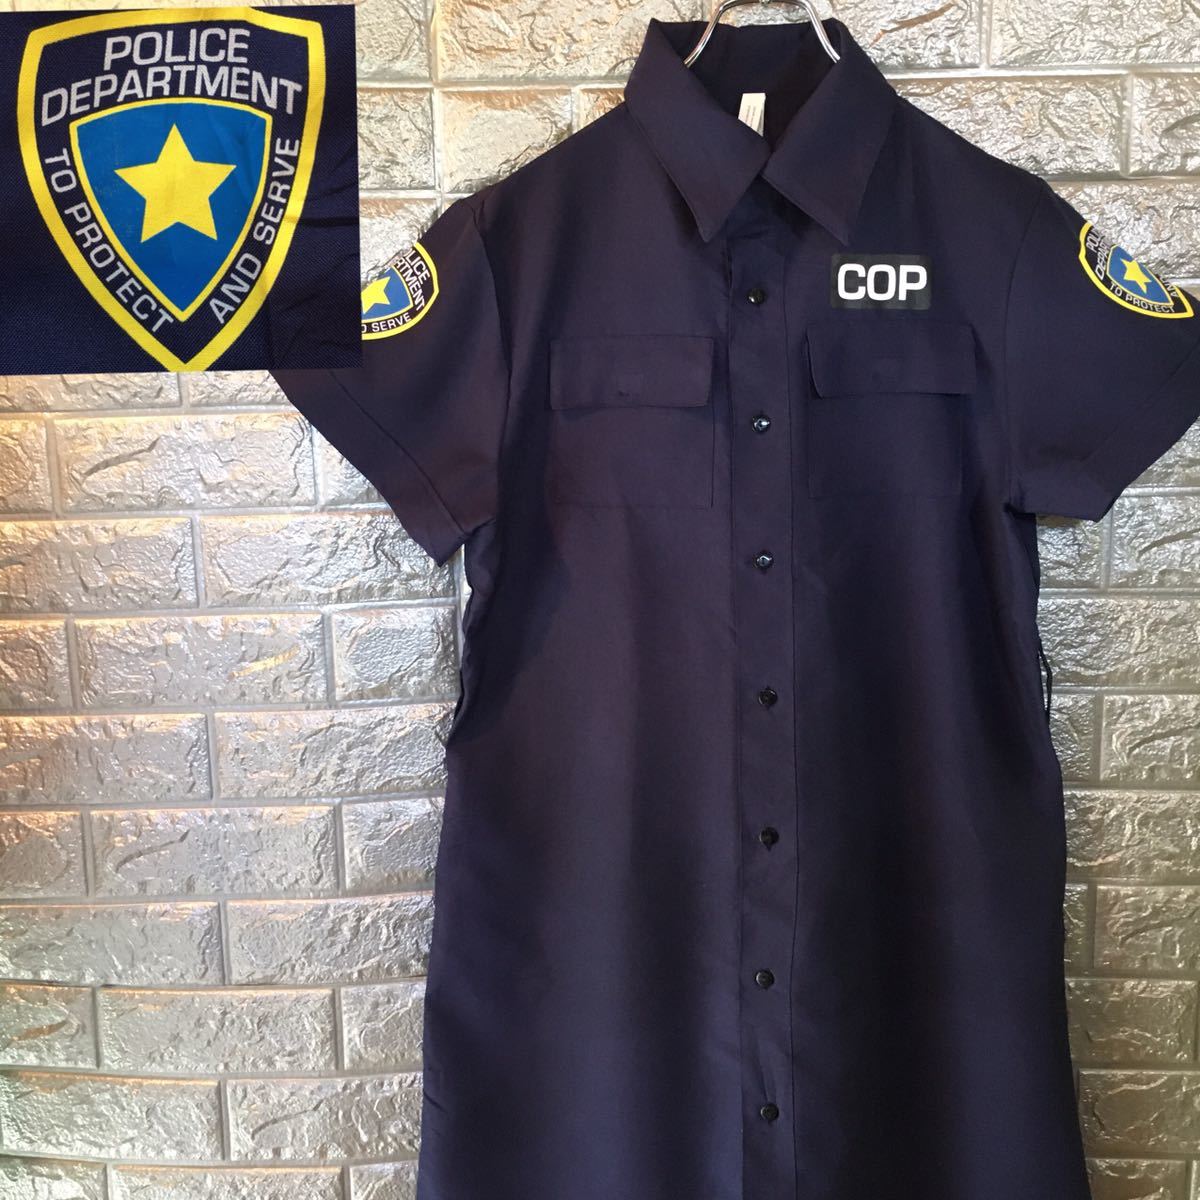 COP POLICE DEPARTMENT American Police Uniform Short Sleeve One Piece